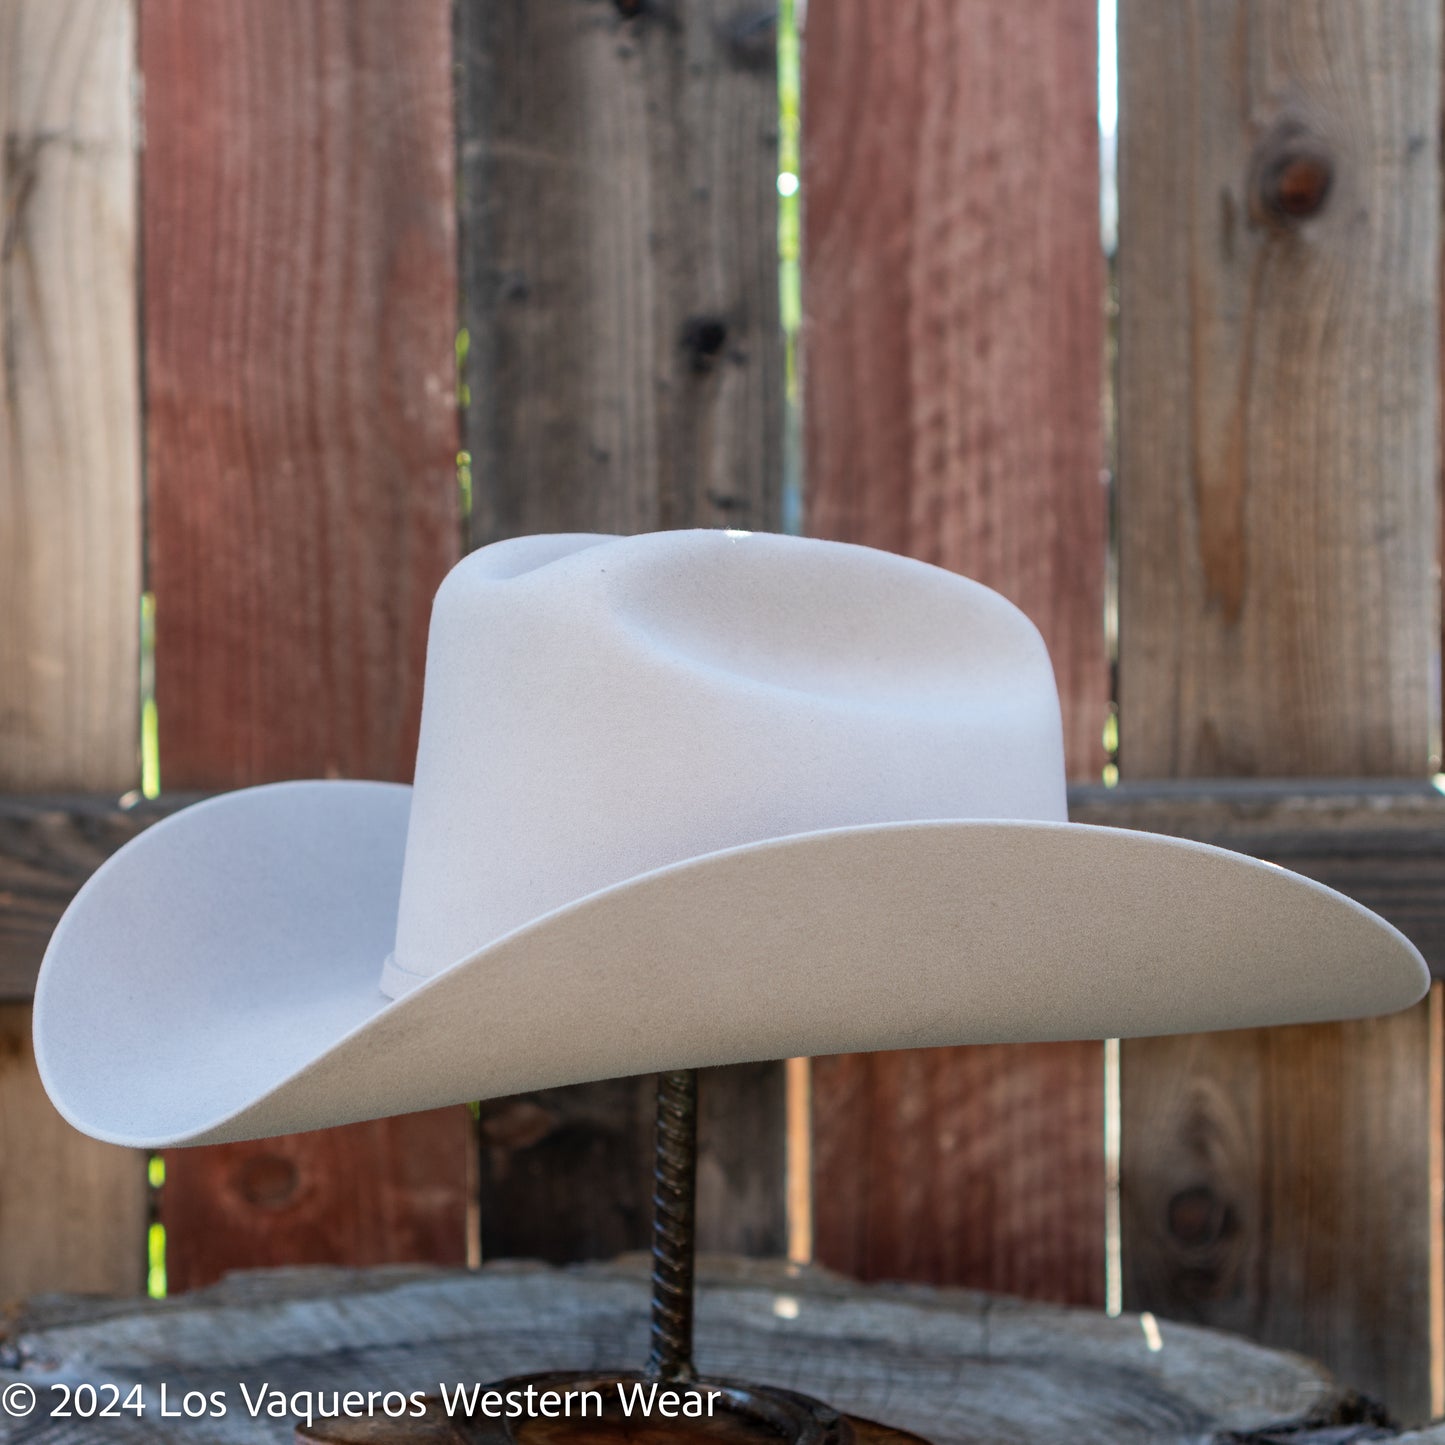 Stetson 6x Guadalupe Felt Cowboy Hat Silverbelly